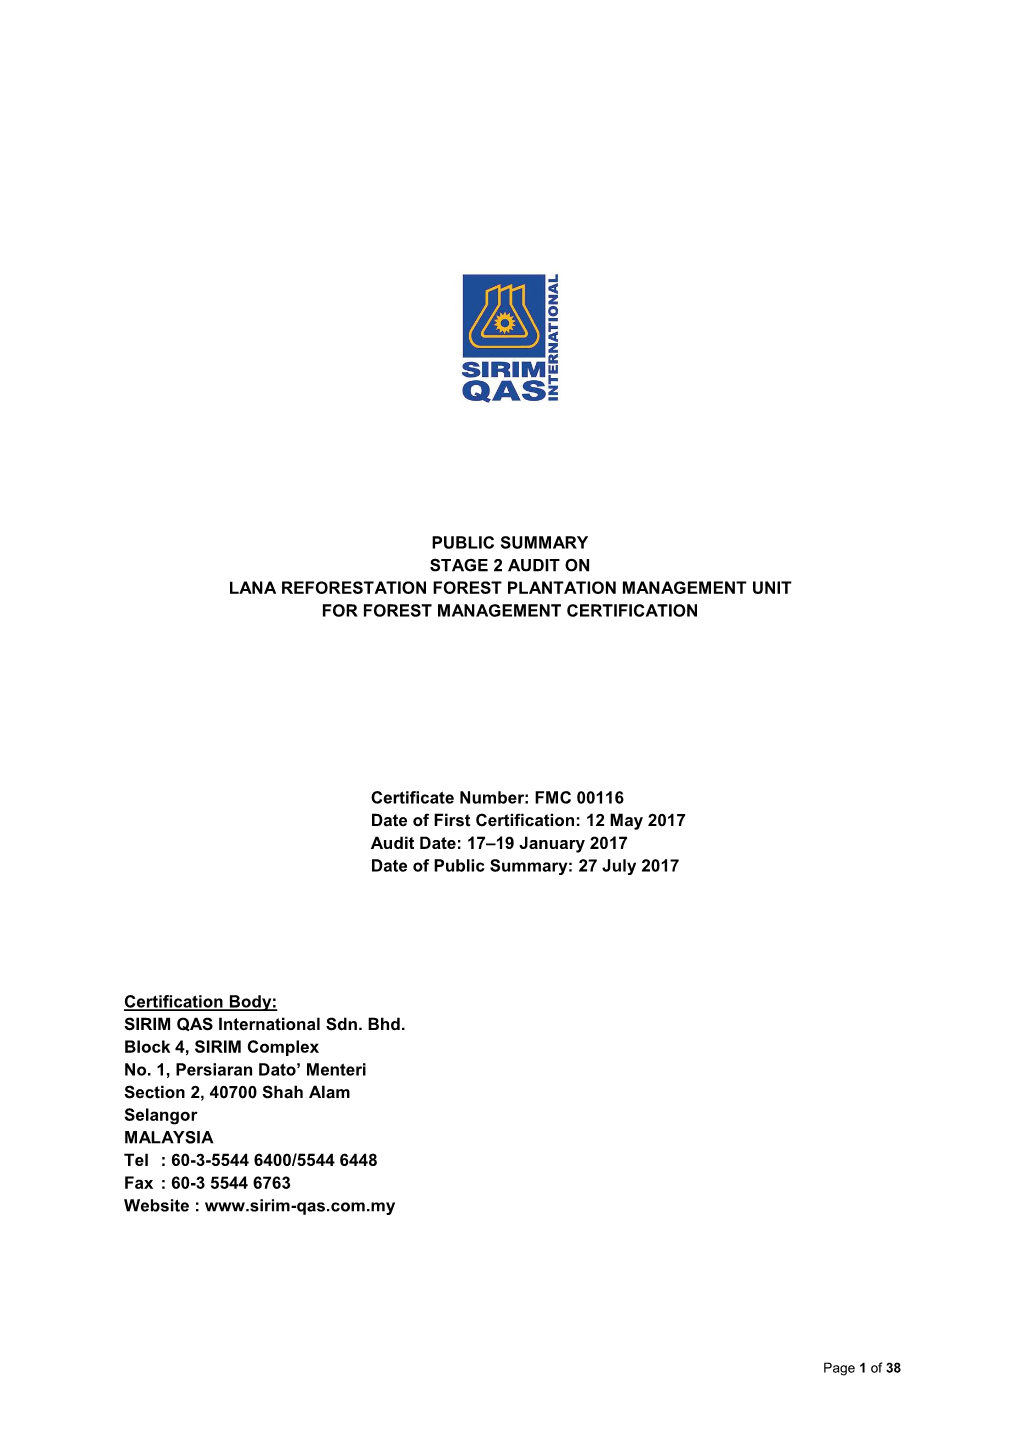 Public Summary Stage 2 Audit on Lana Reforestation Forest Plantation Management Unit for Forest Management Certification